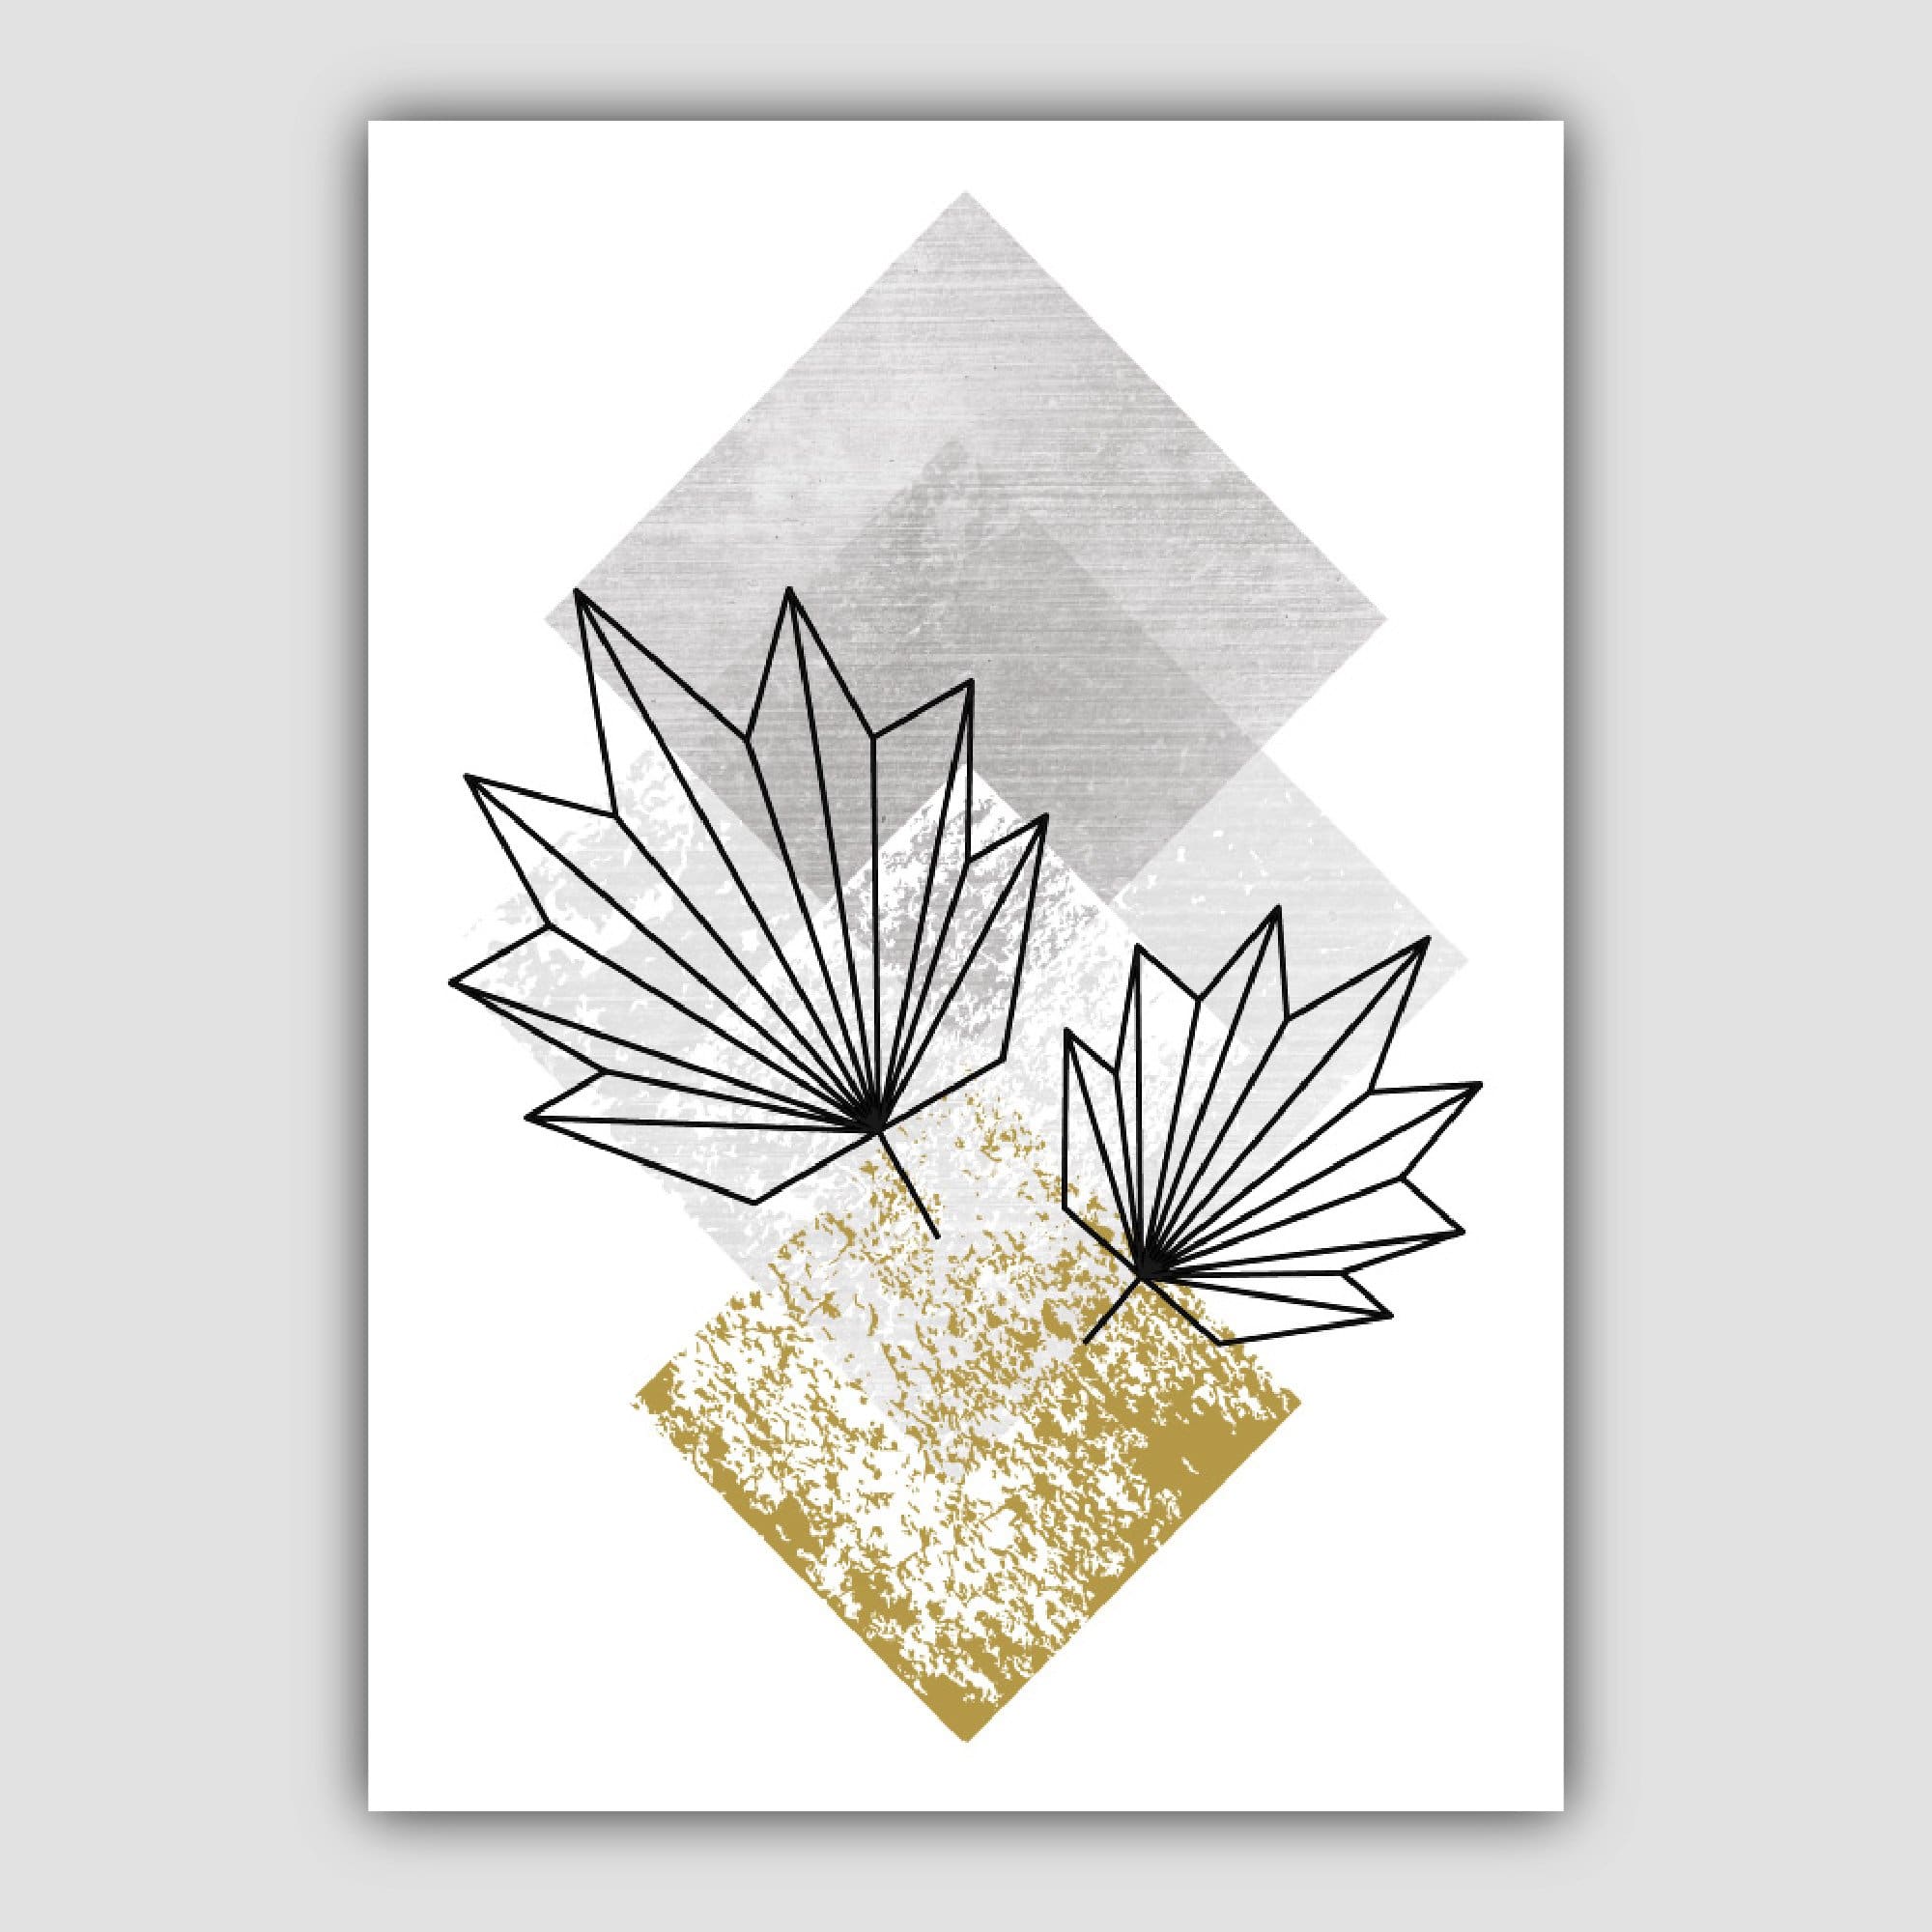 Set of 3 Geometric Yellow Floral Art Prints